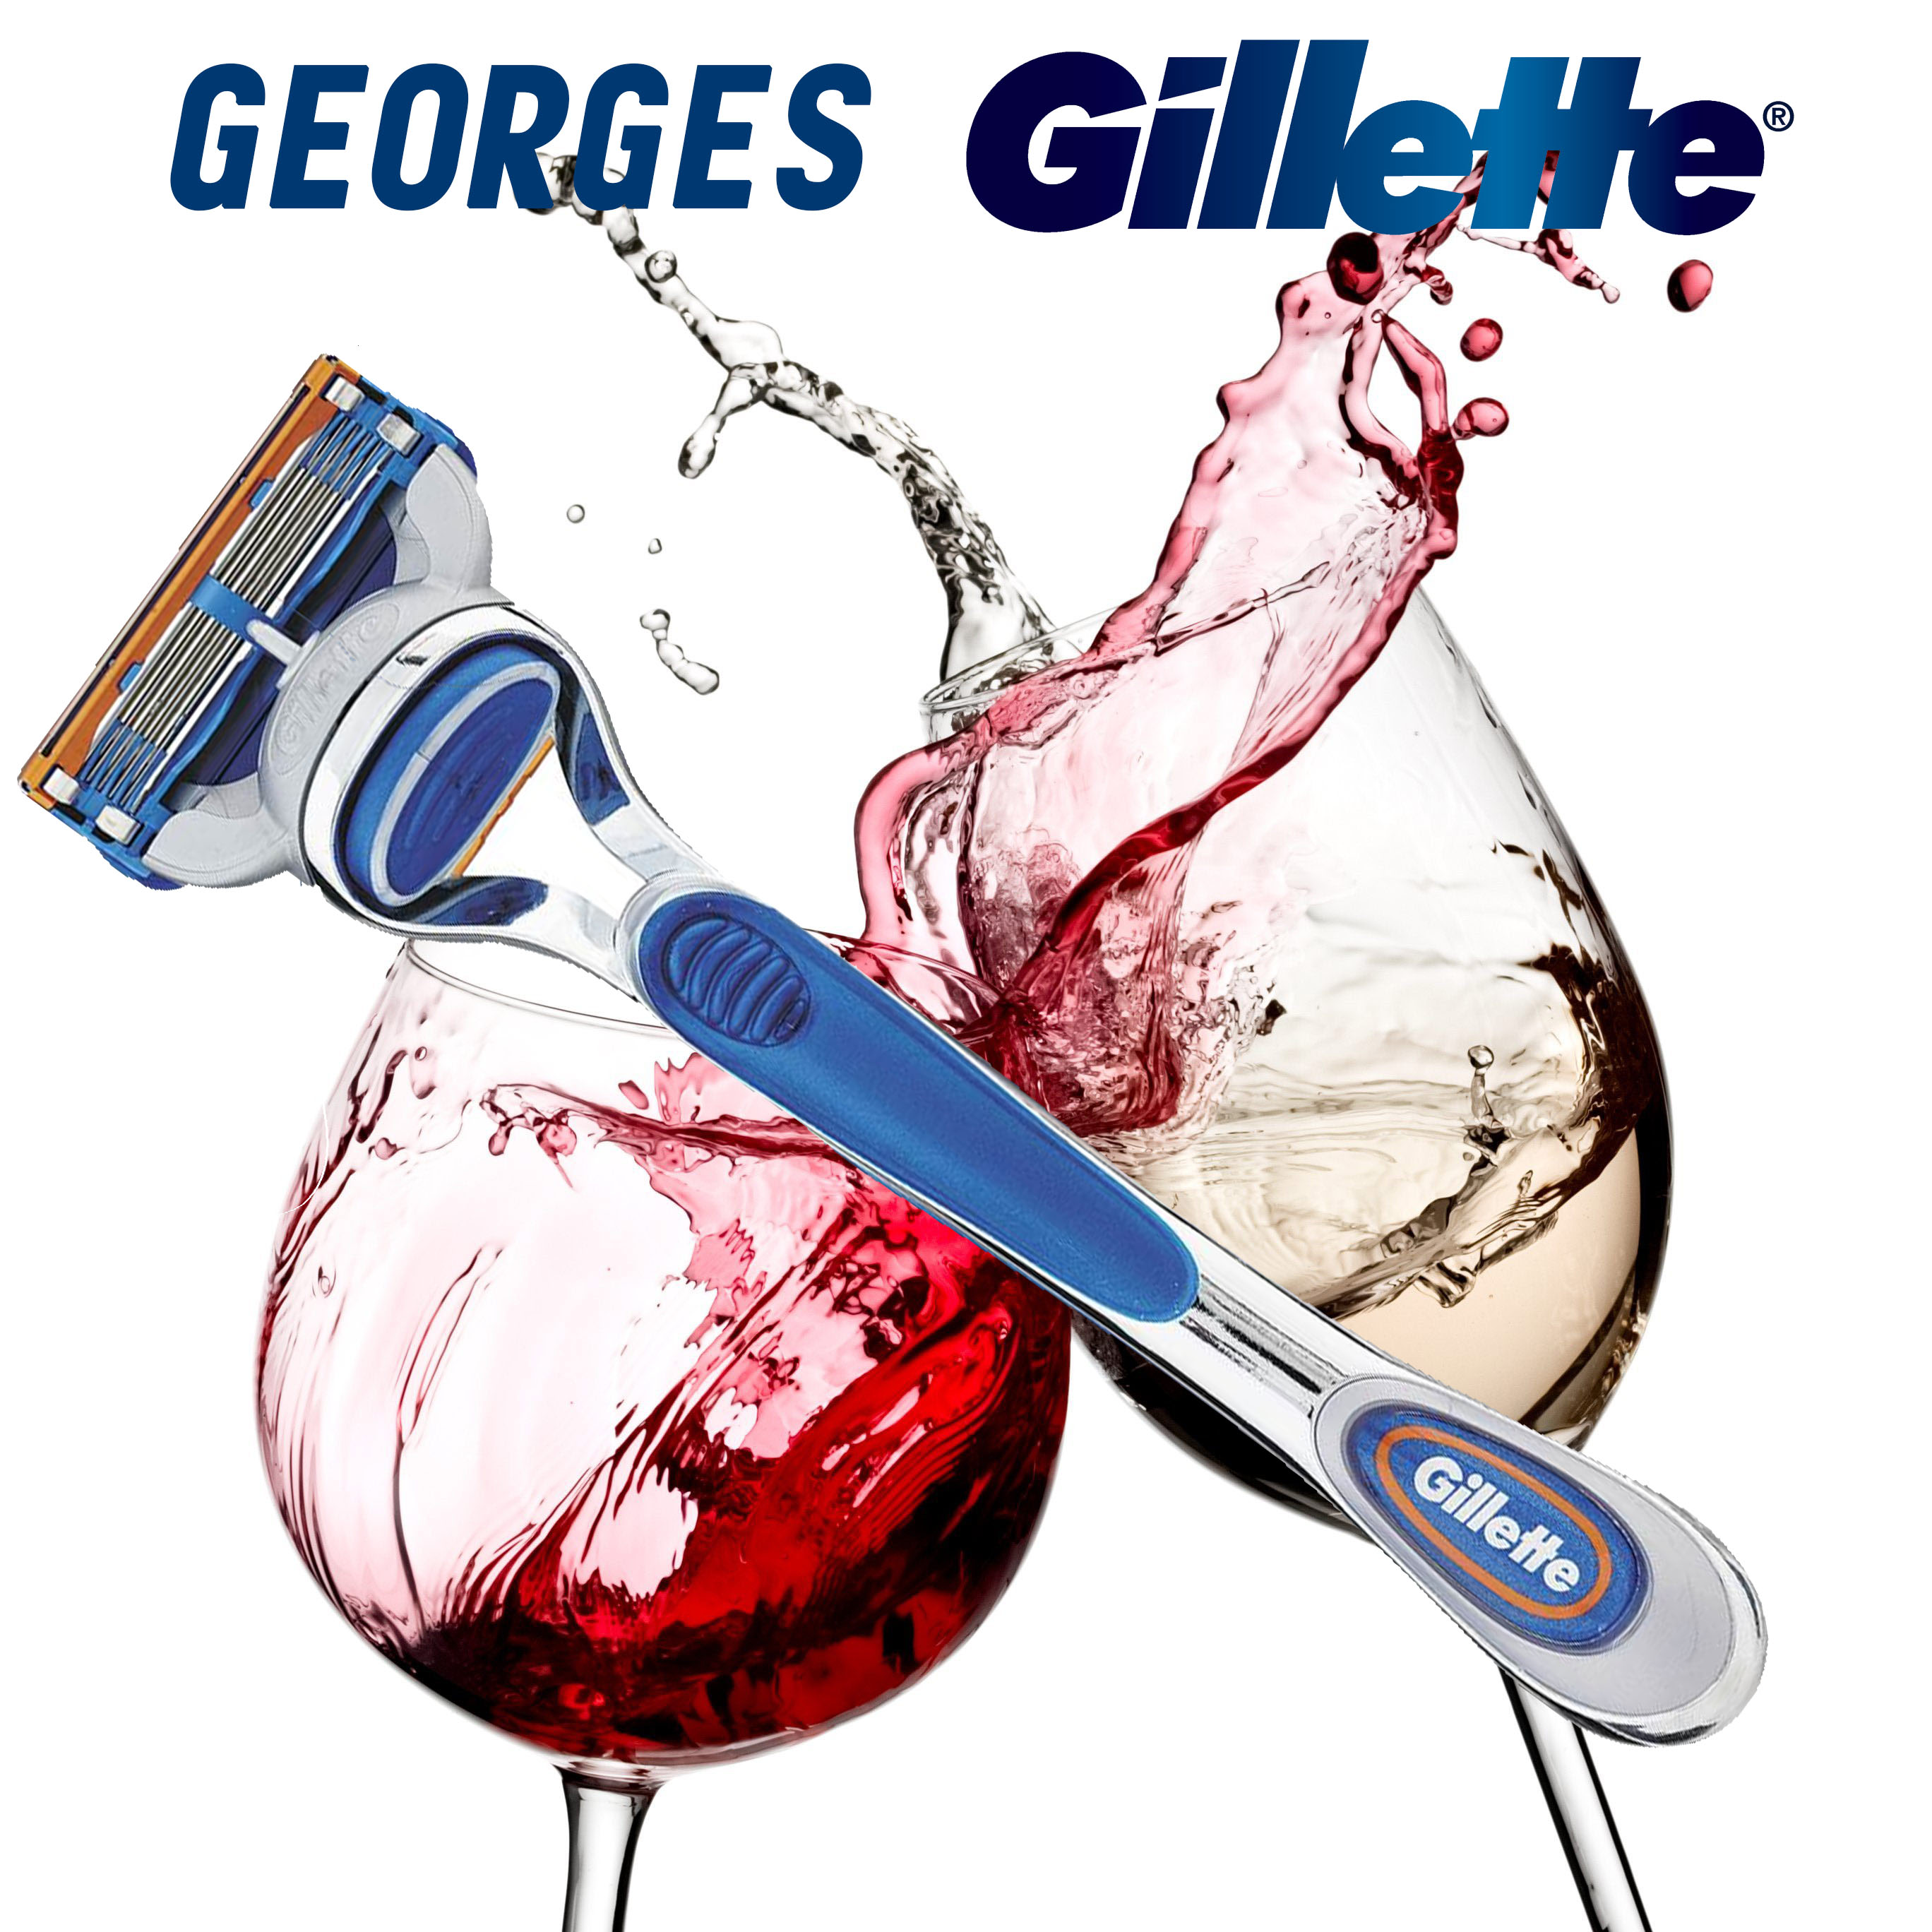 Georges Gilette.jpg